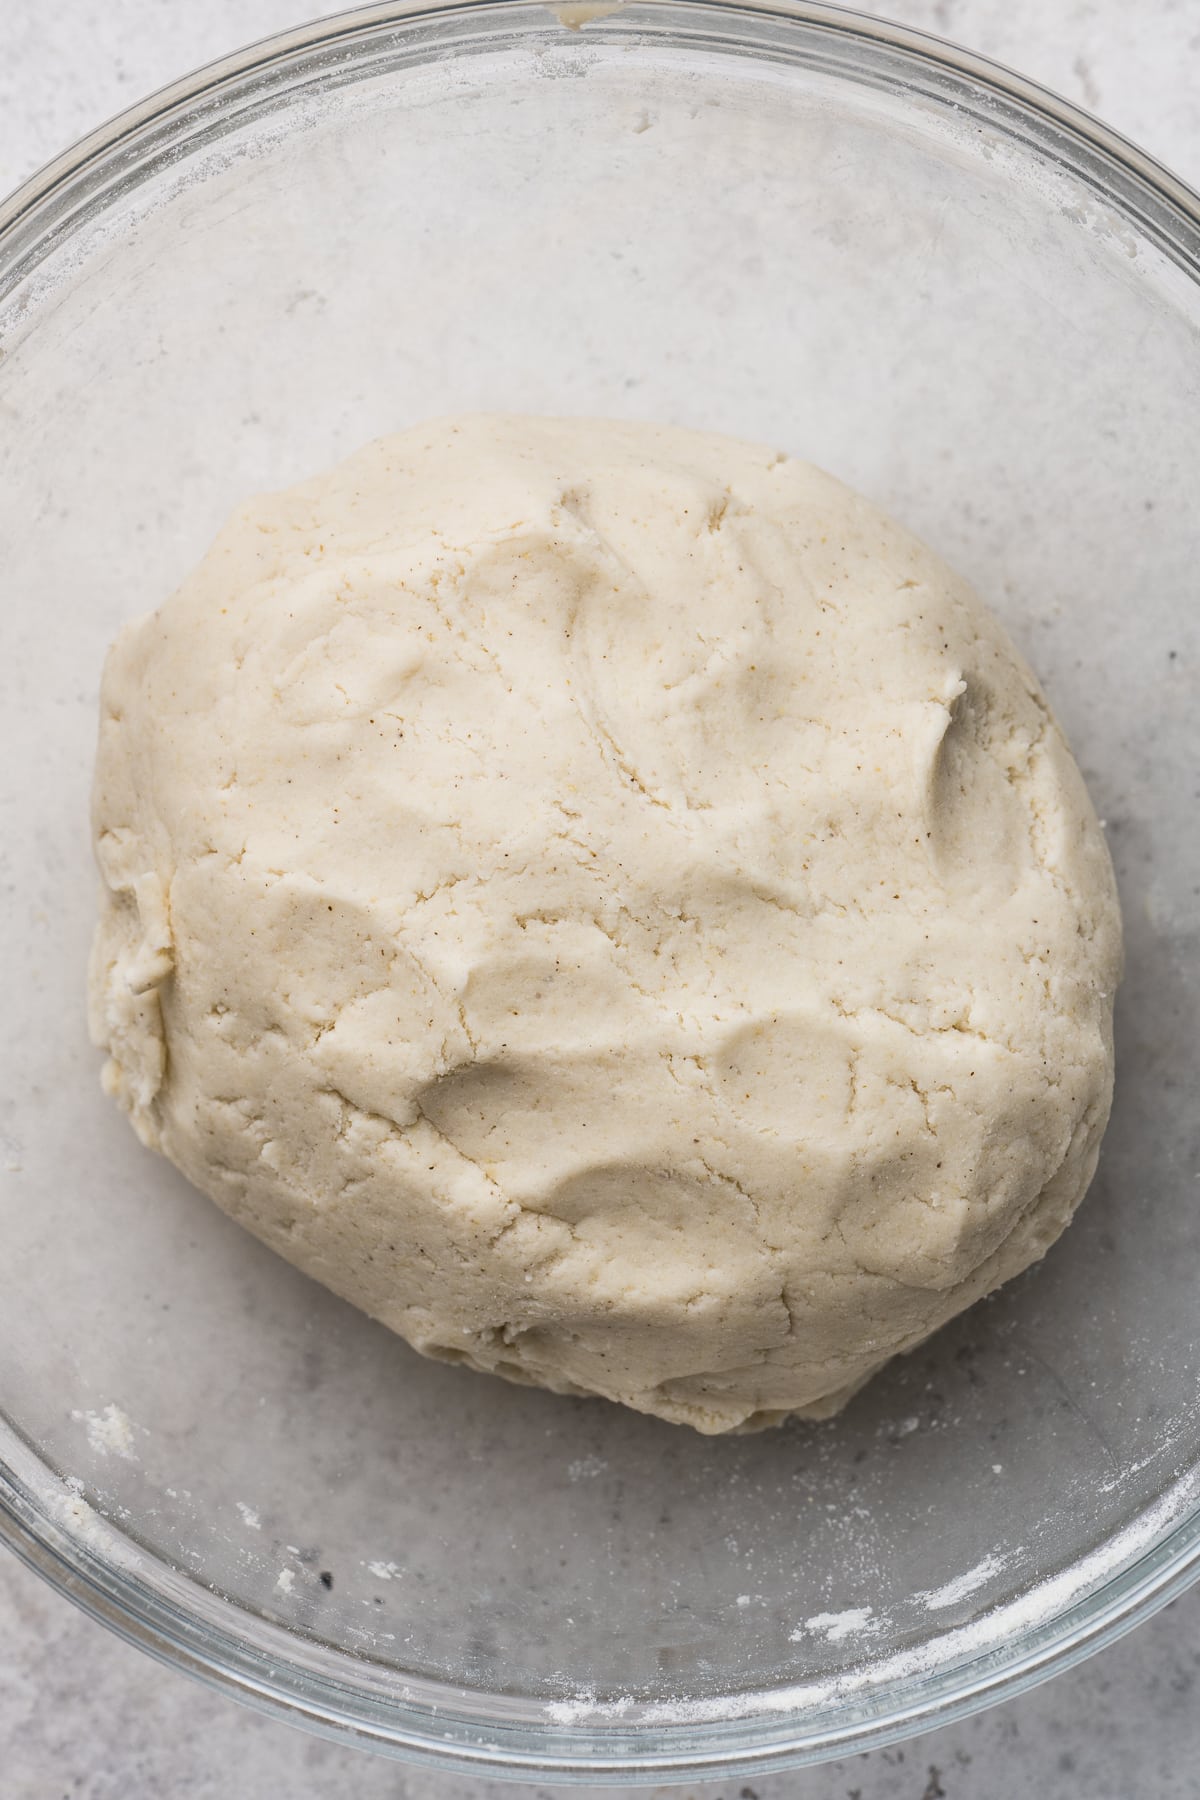 Masa dough for tlacoyos in a bowl.